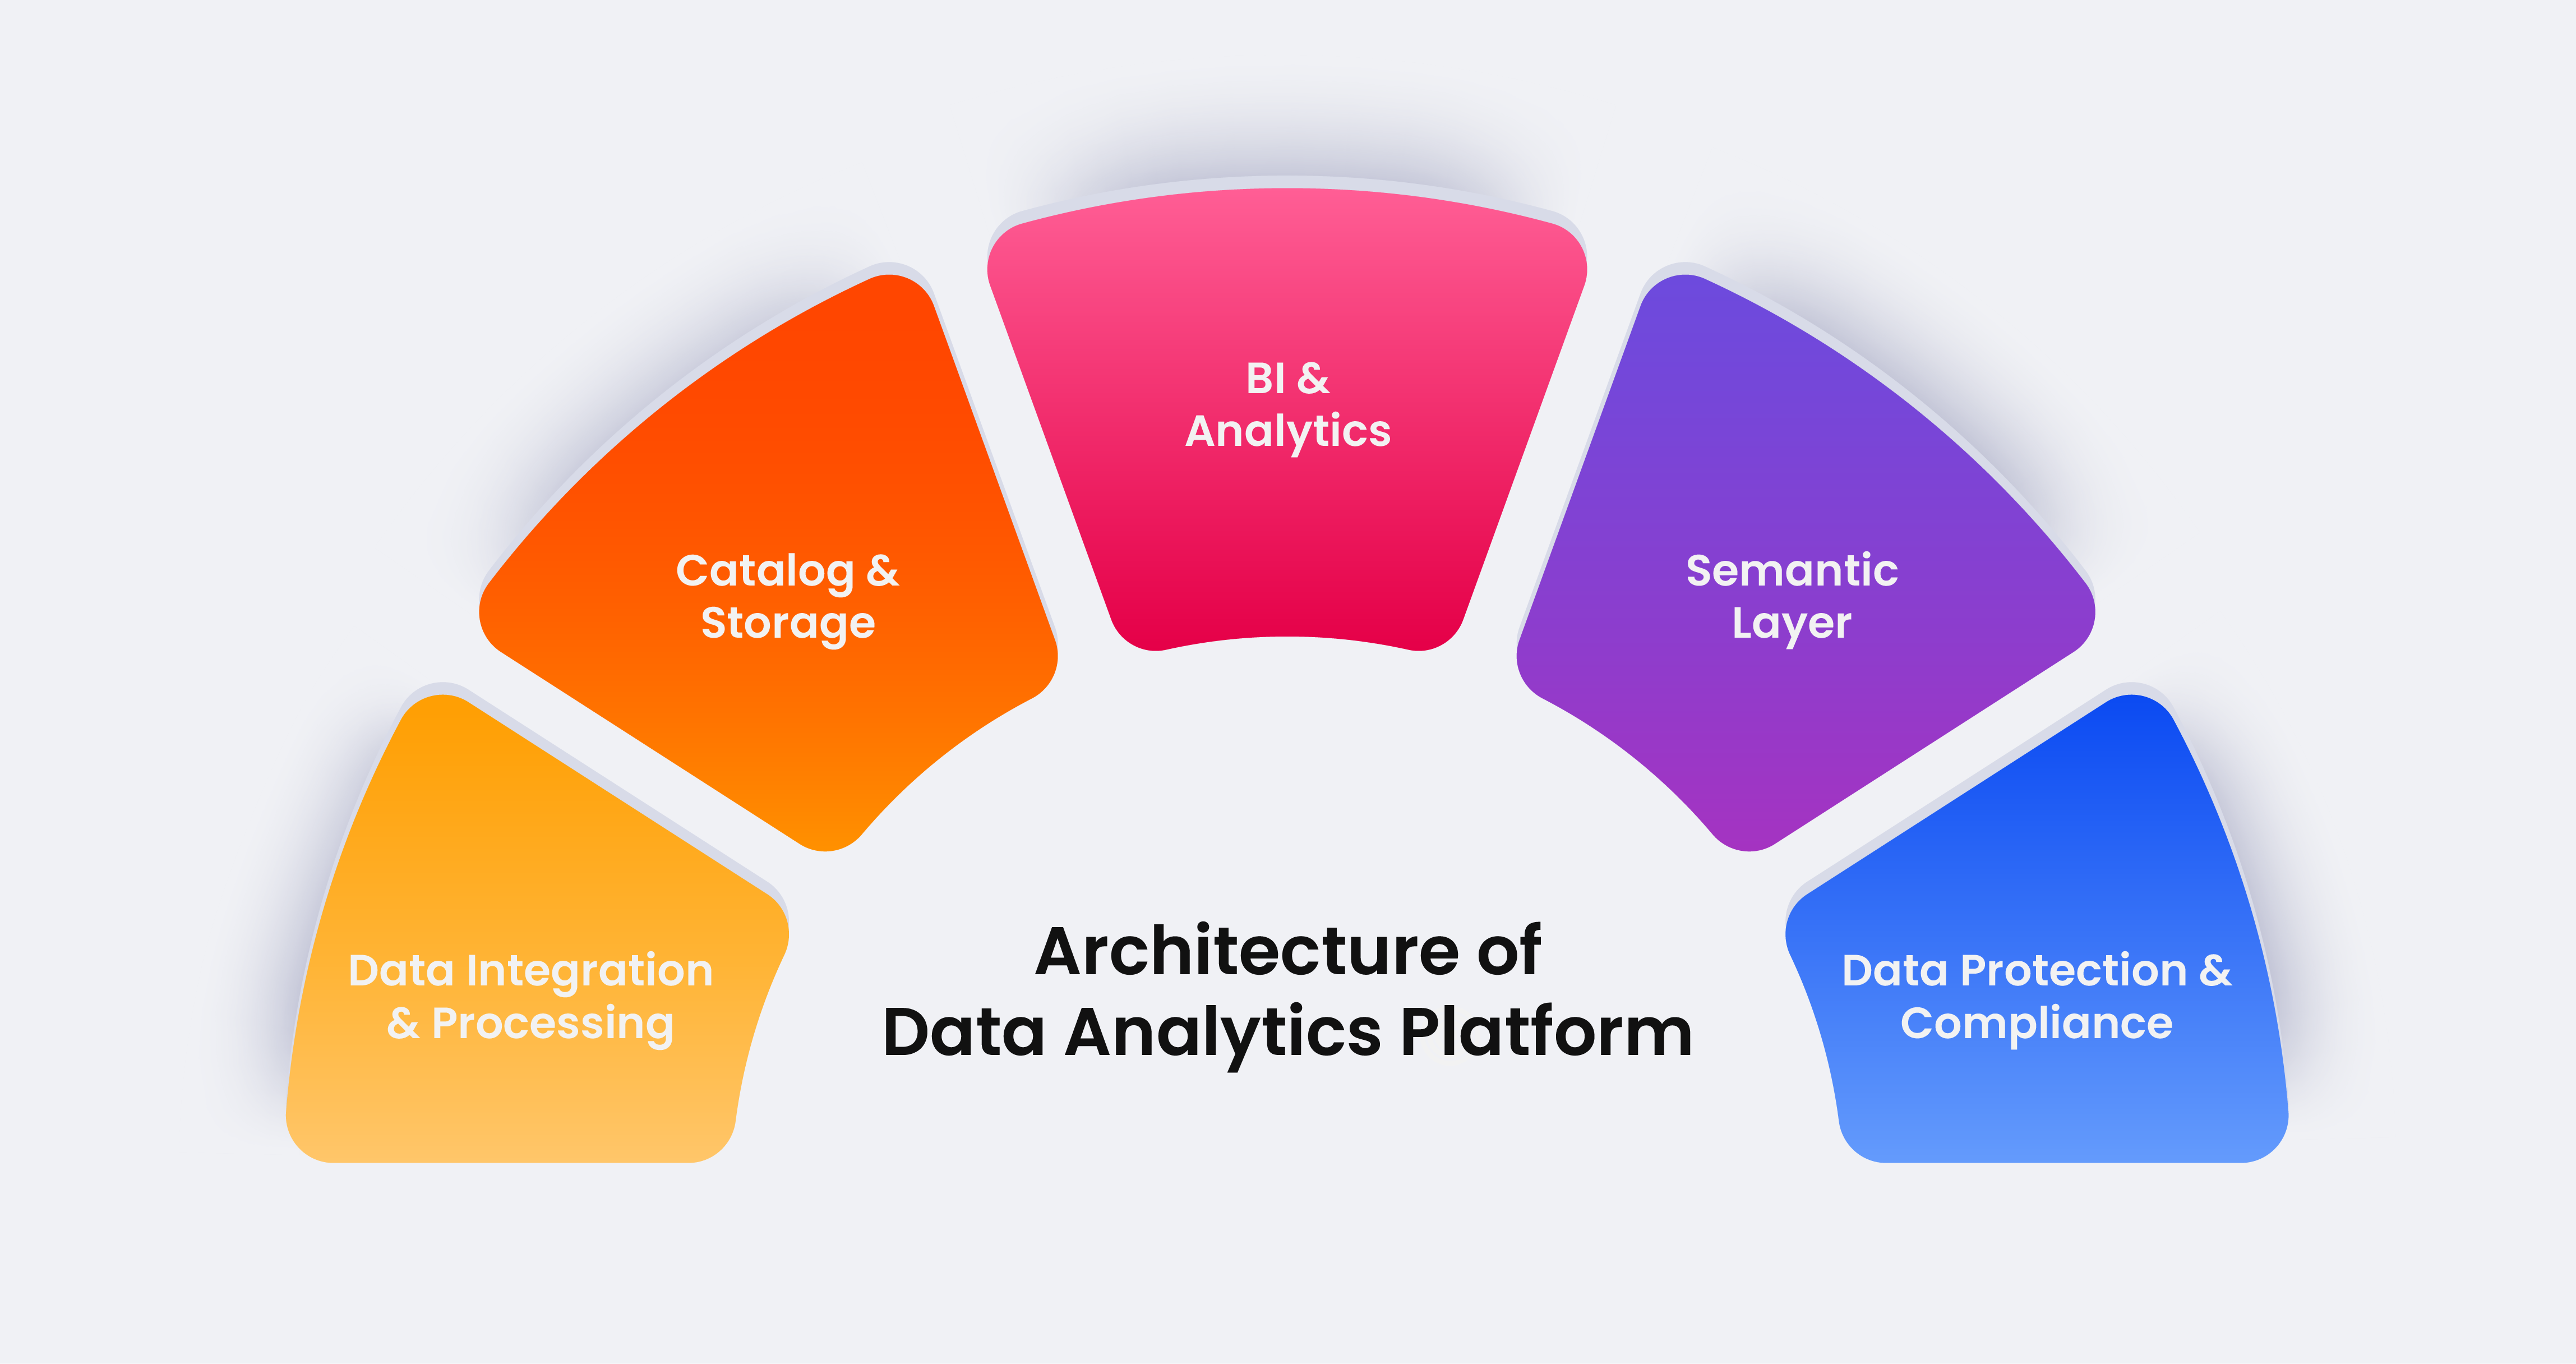 Architecture of Data Analytics Platform